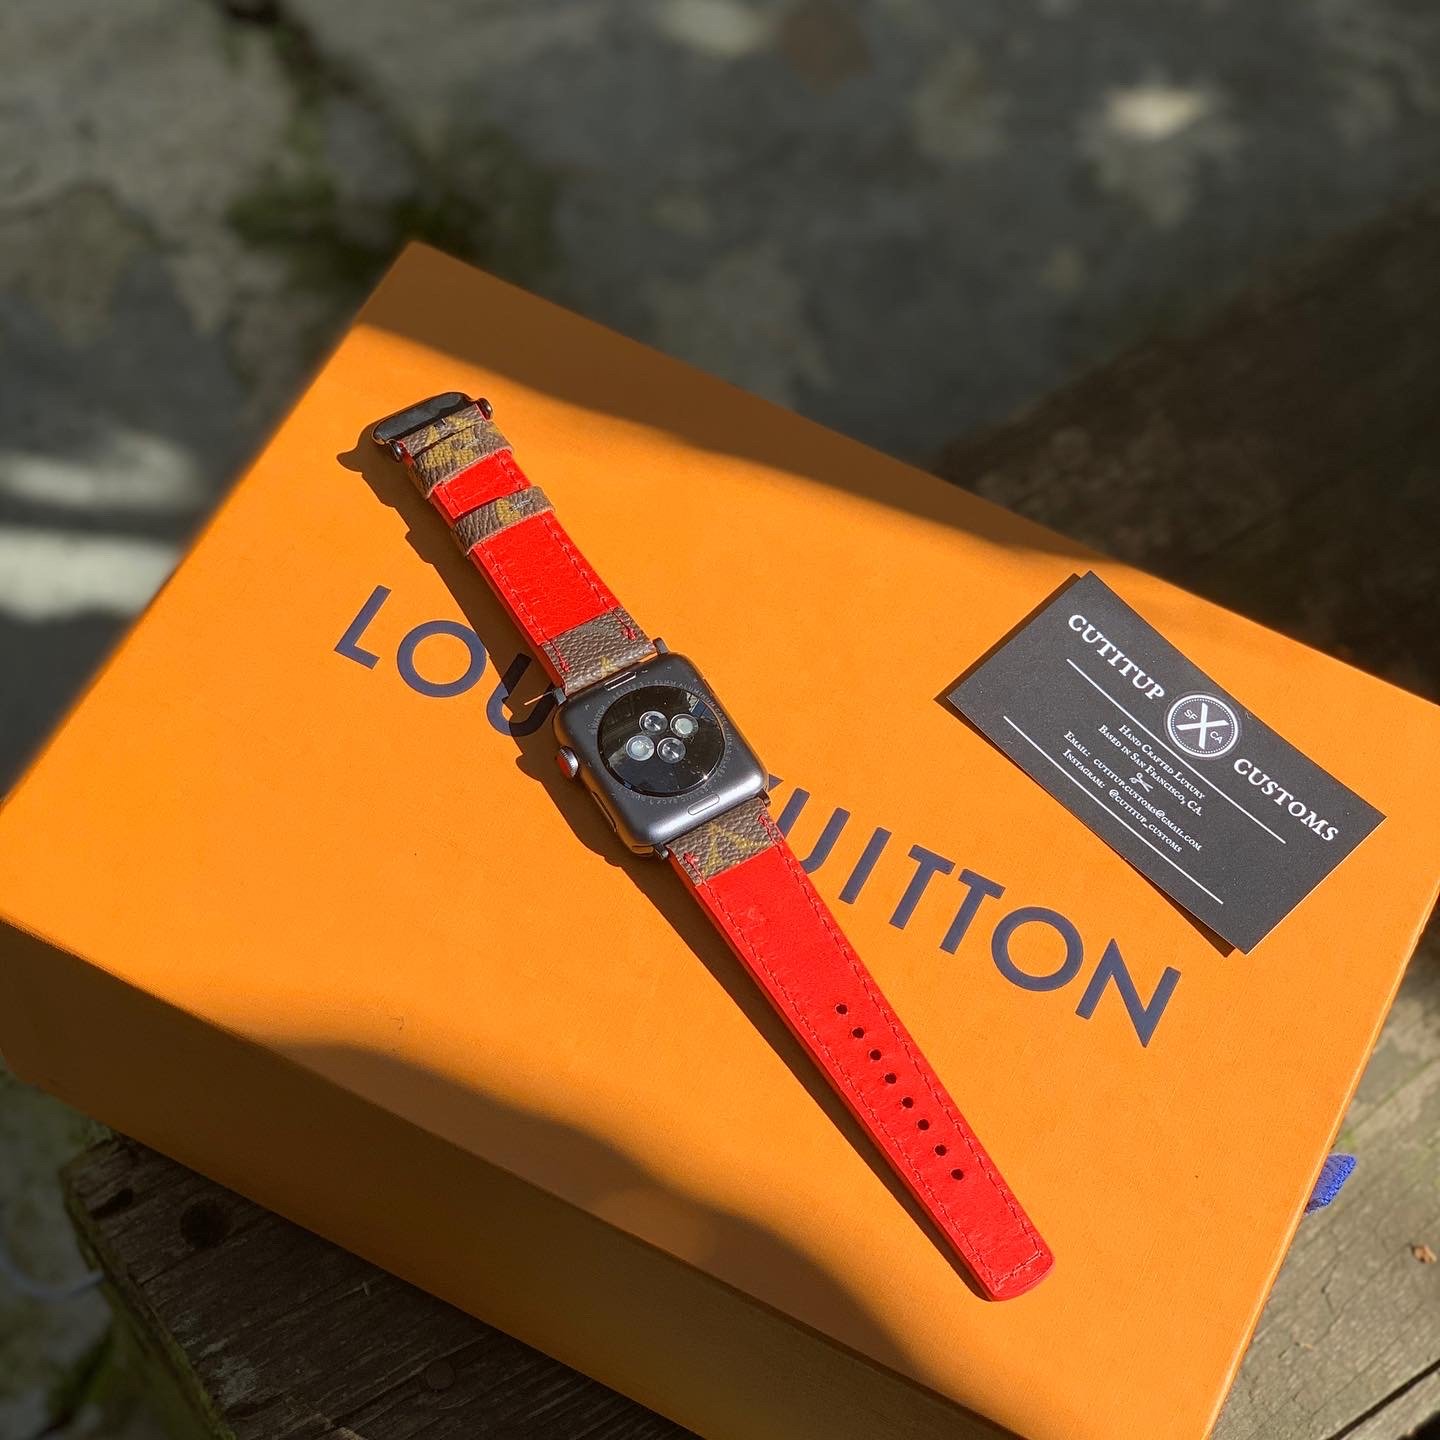 Red Classic Monogram Watchband | Cutitup_Customs